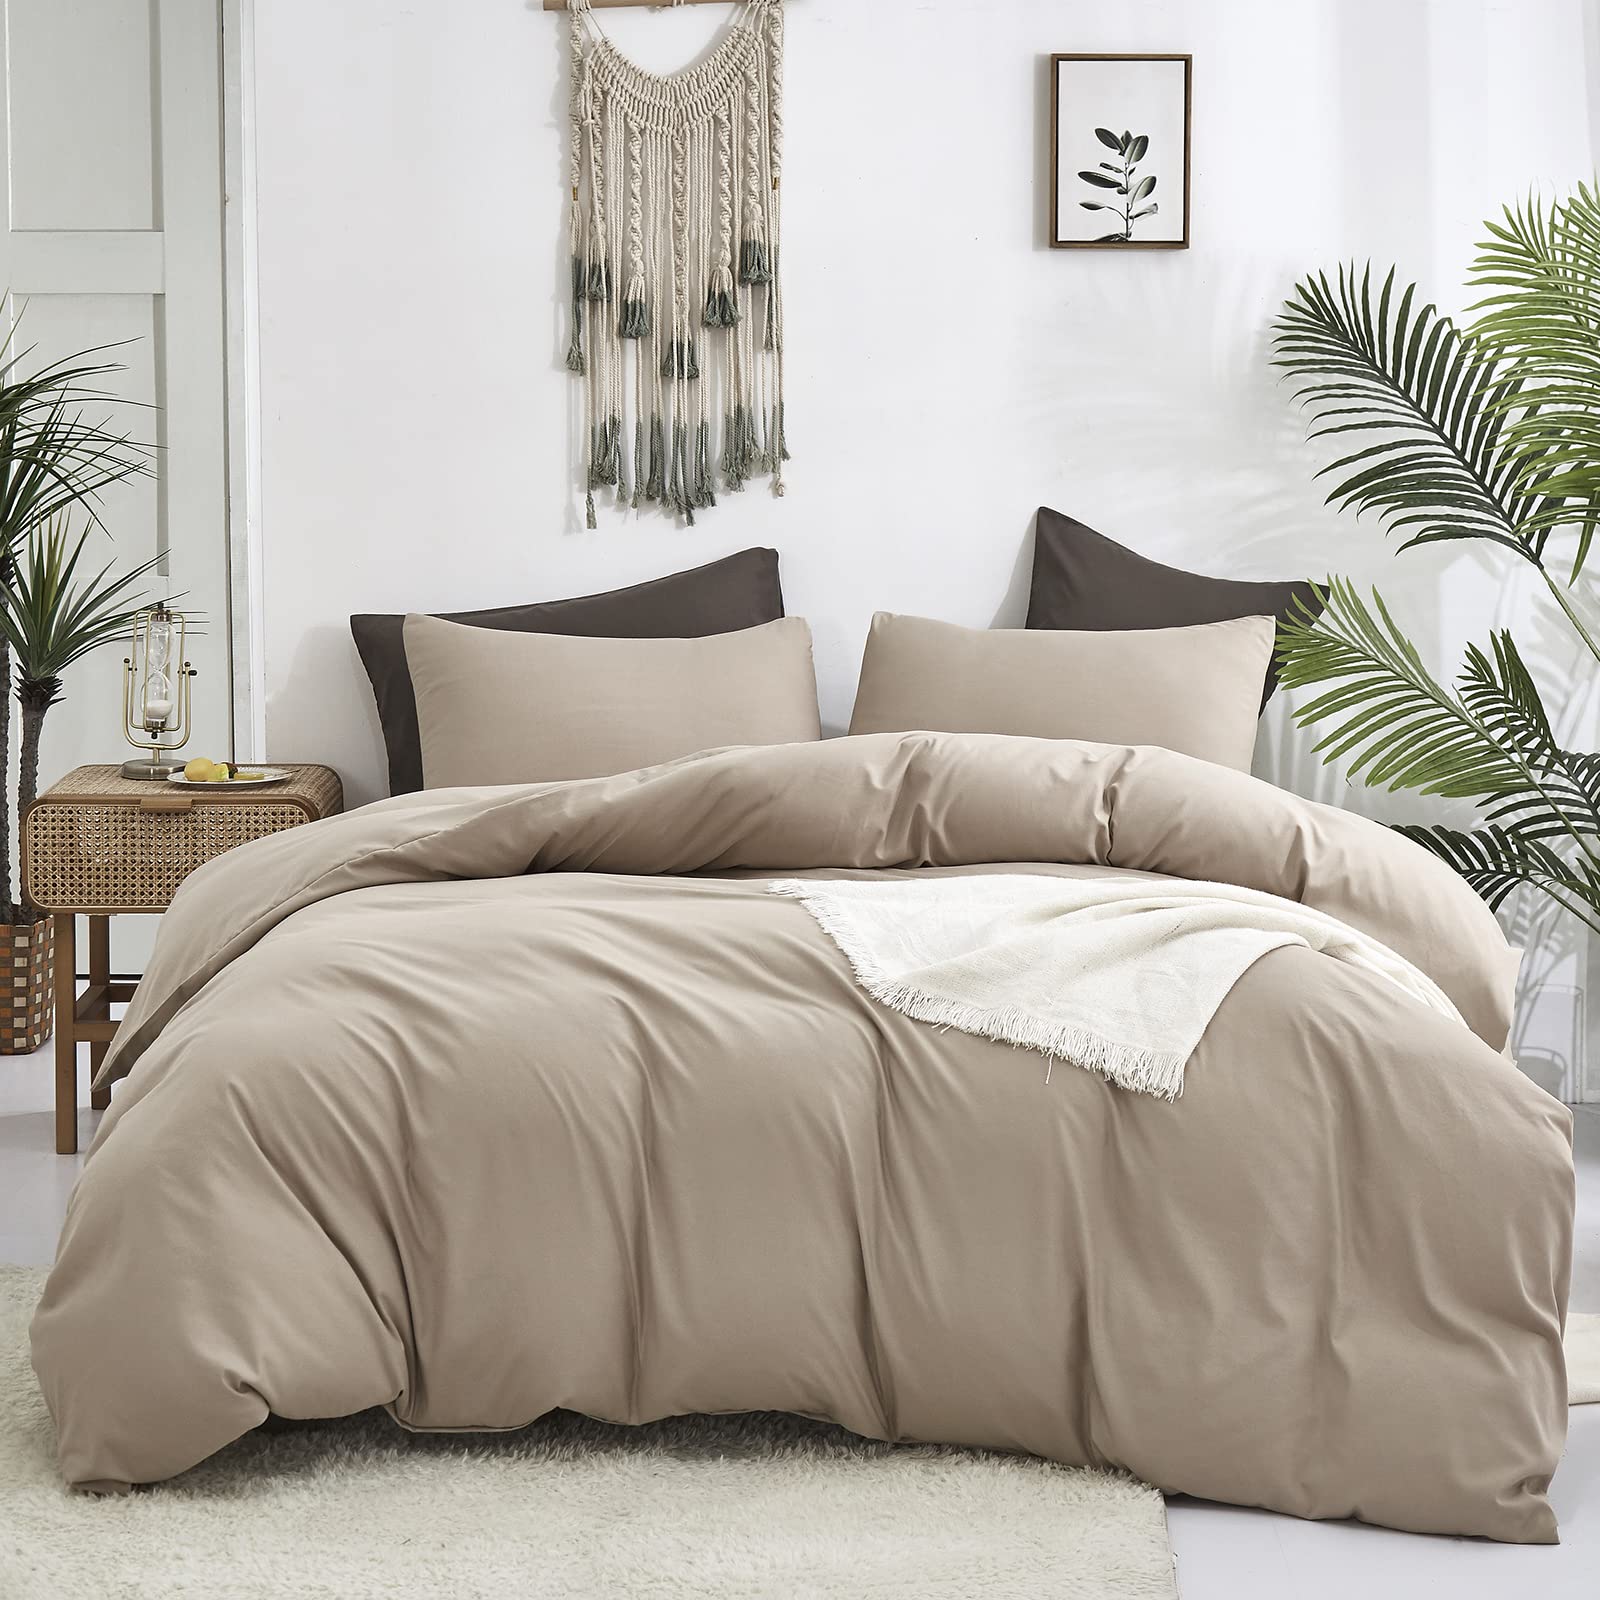 Cottonight Khaki Comforter Set King Cream Coffee Bedding Comforter Set Cream Khaki Solid Blanket Quilts Solid Modern Soft Breath